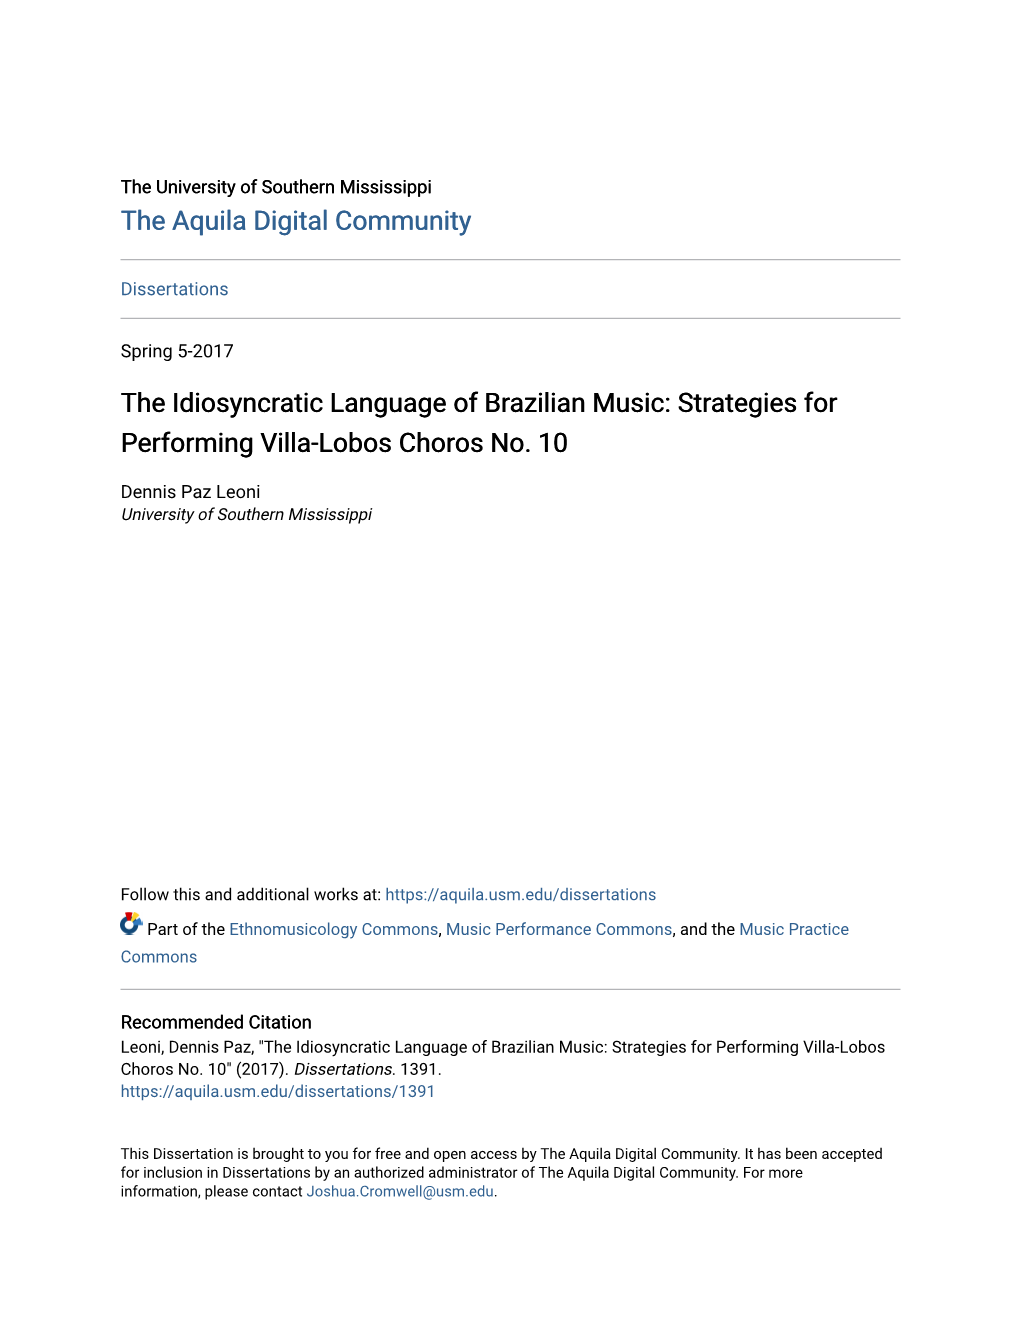 The Idiosyncratic Language of Brazilian Music: Strategies for Performing Villa-Lobos Choros No